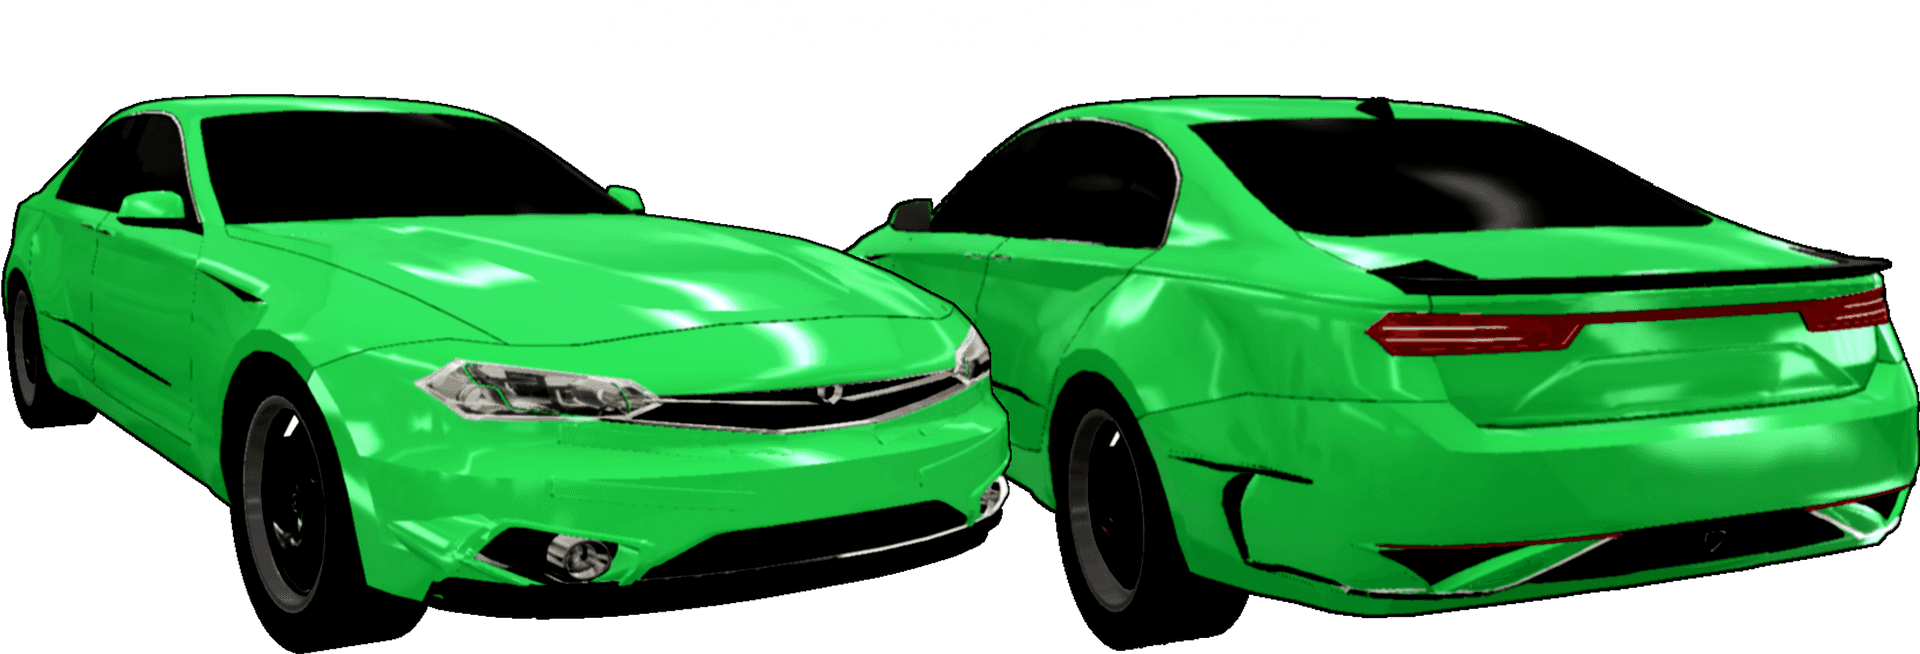 Green Sports Car H D2018 Velocitas PNG